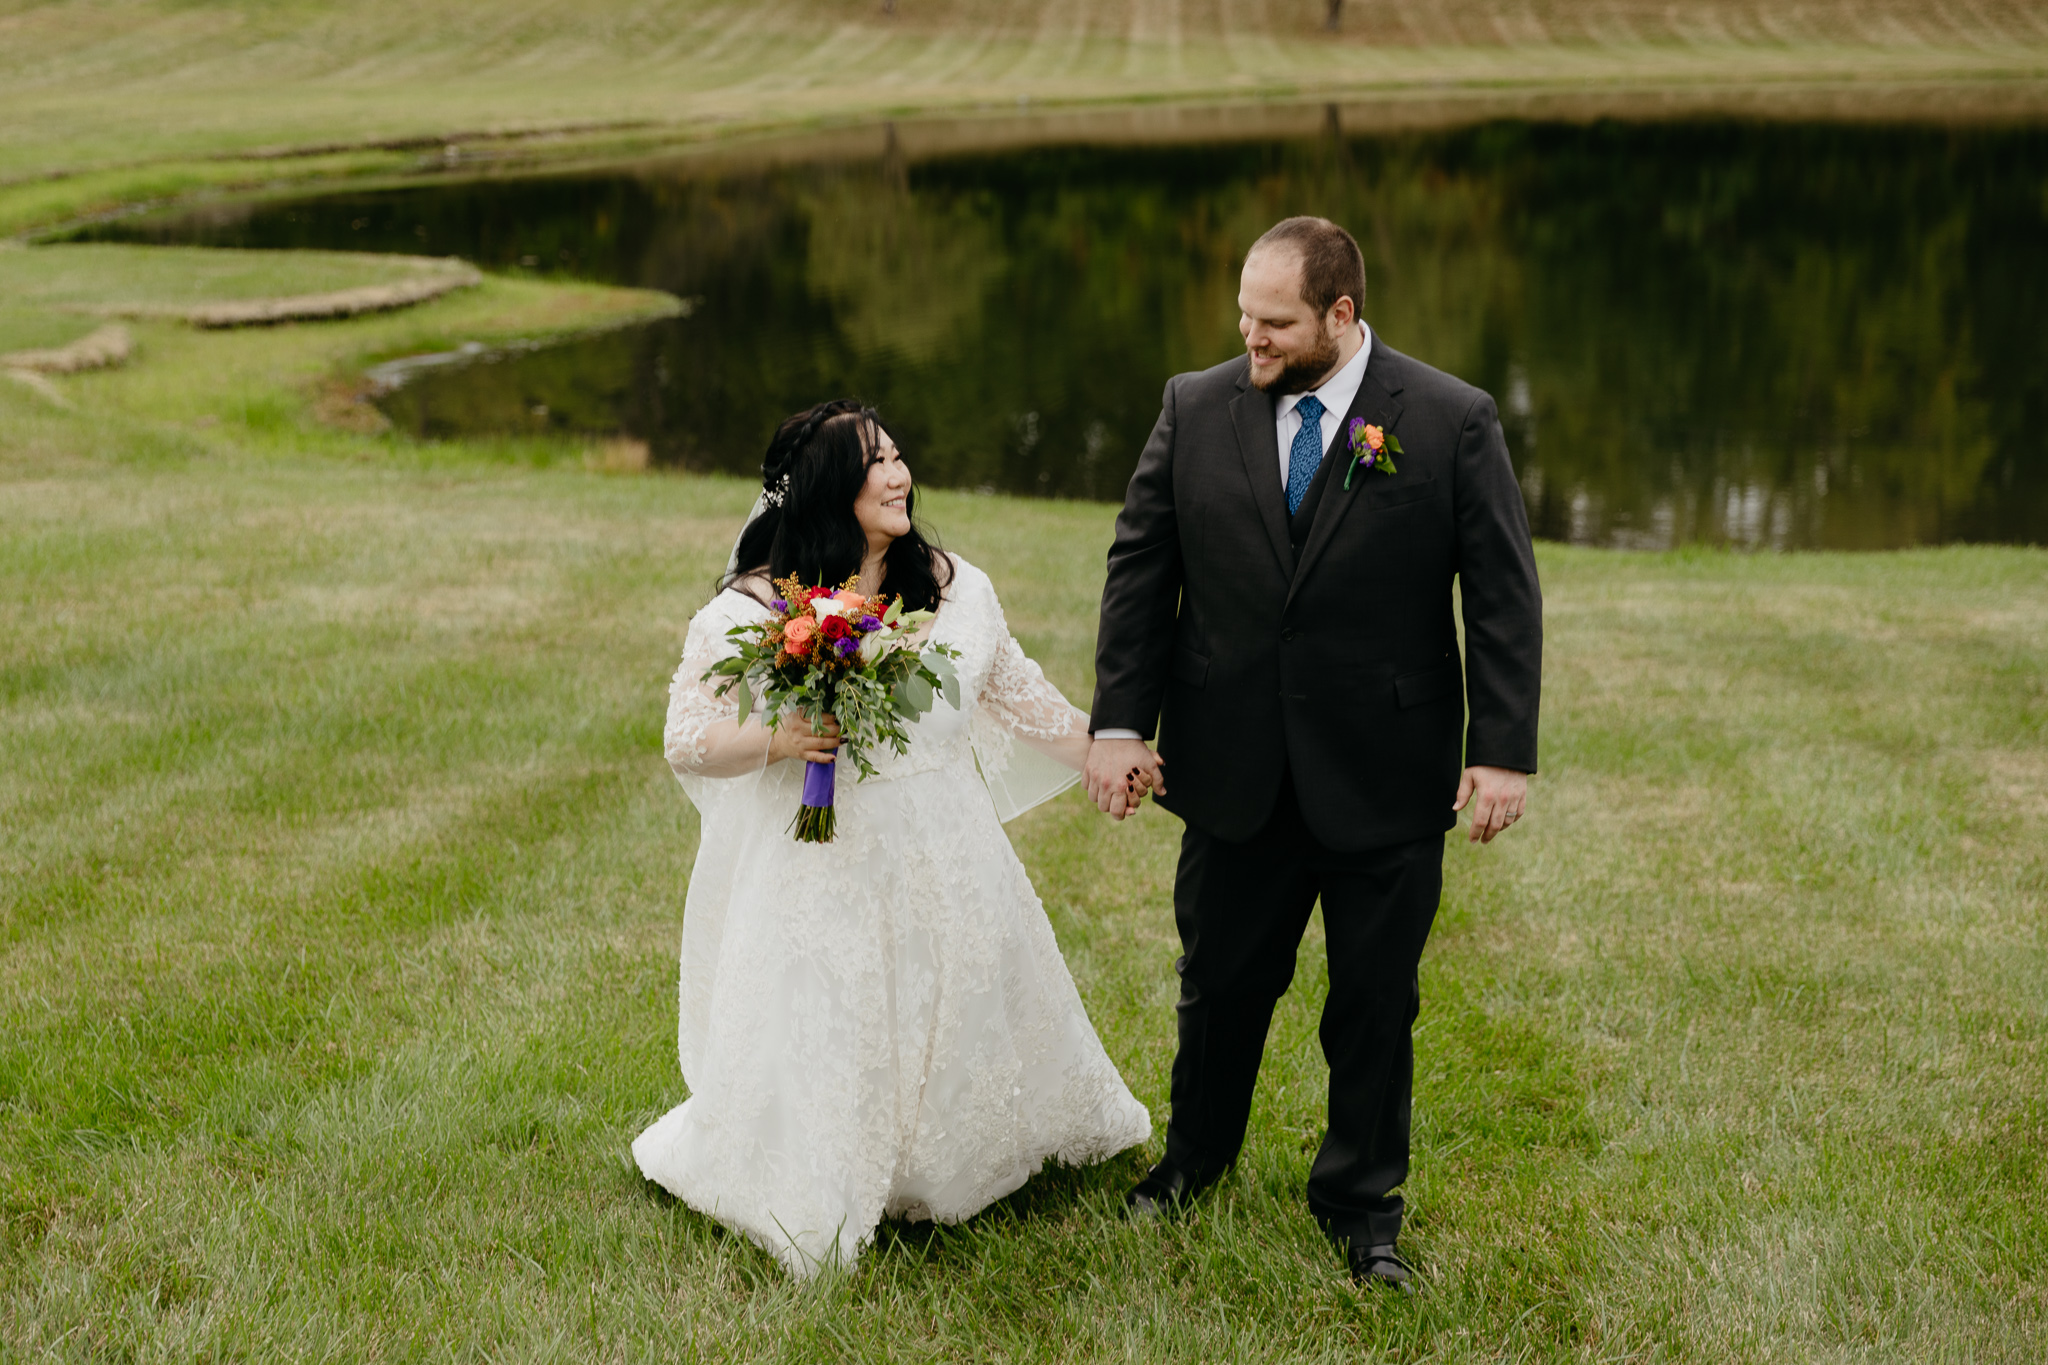 Fort Wayne Backyard Wedding in Indiana || Outdoor Couple Photos